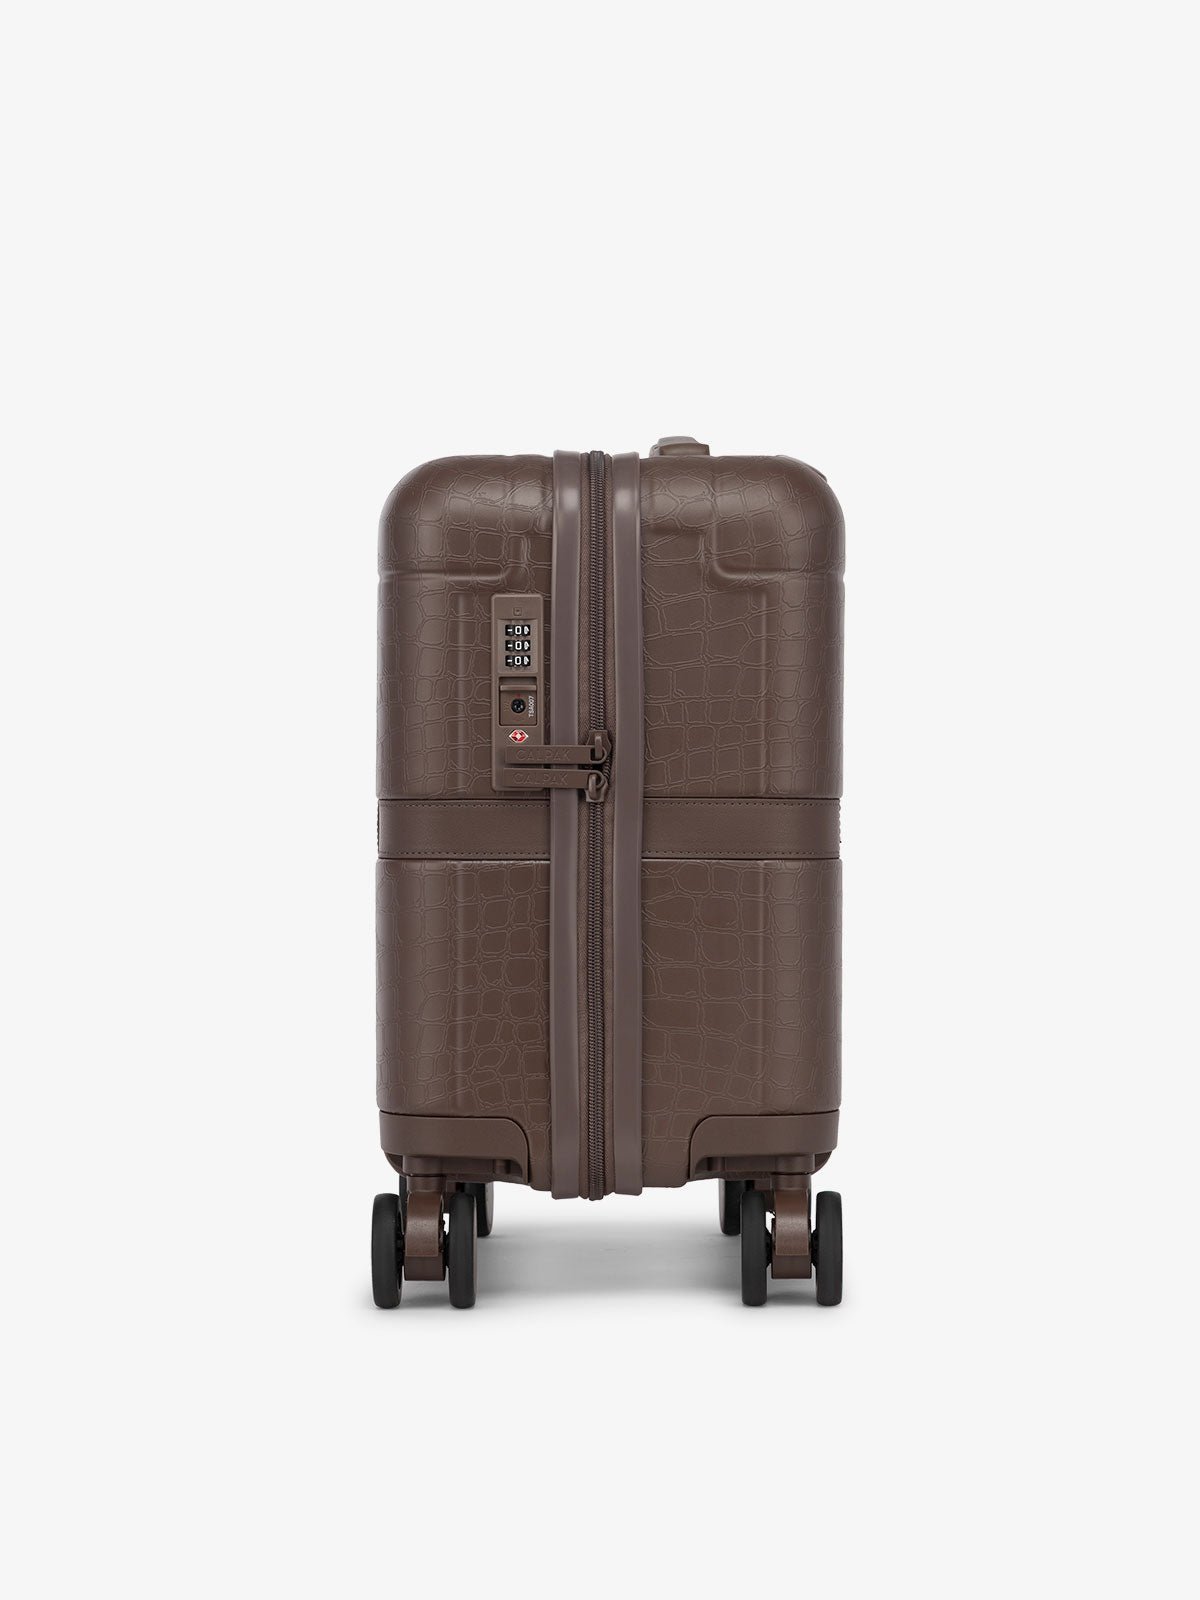 CALPAK TRNK mini luggage with TSA lock and 360 spinner wheels in espresso